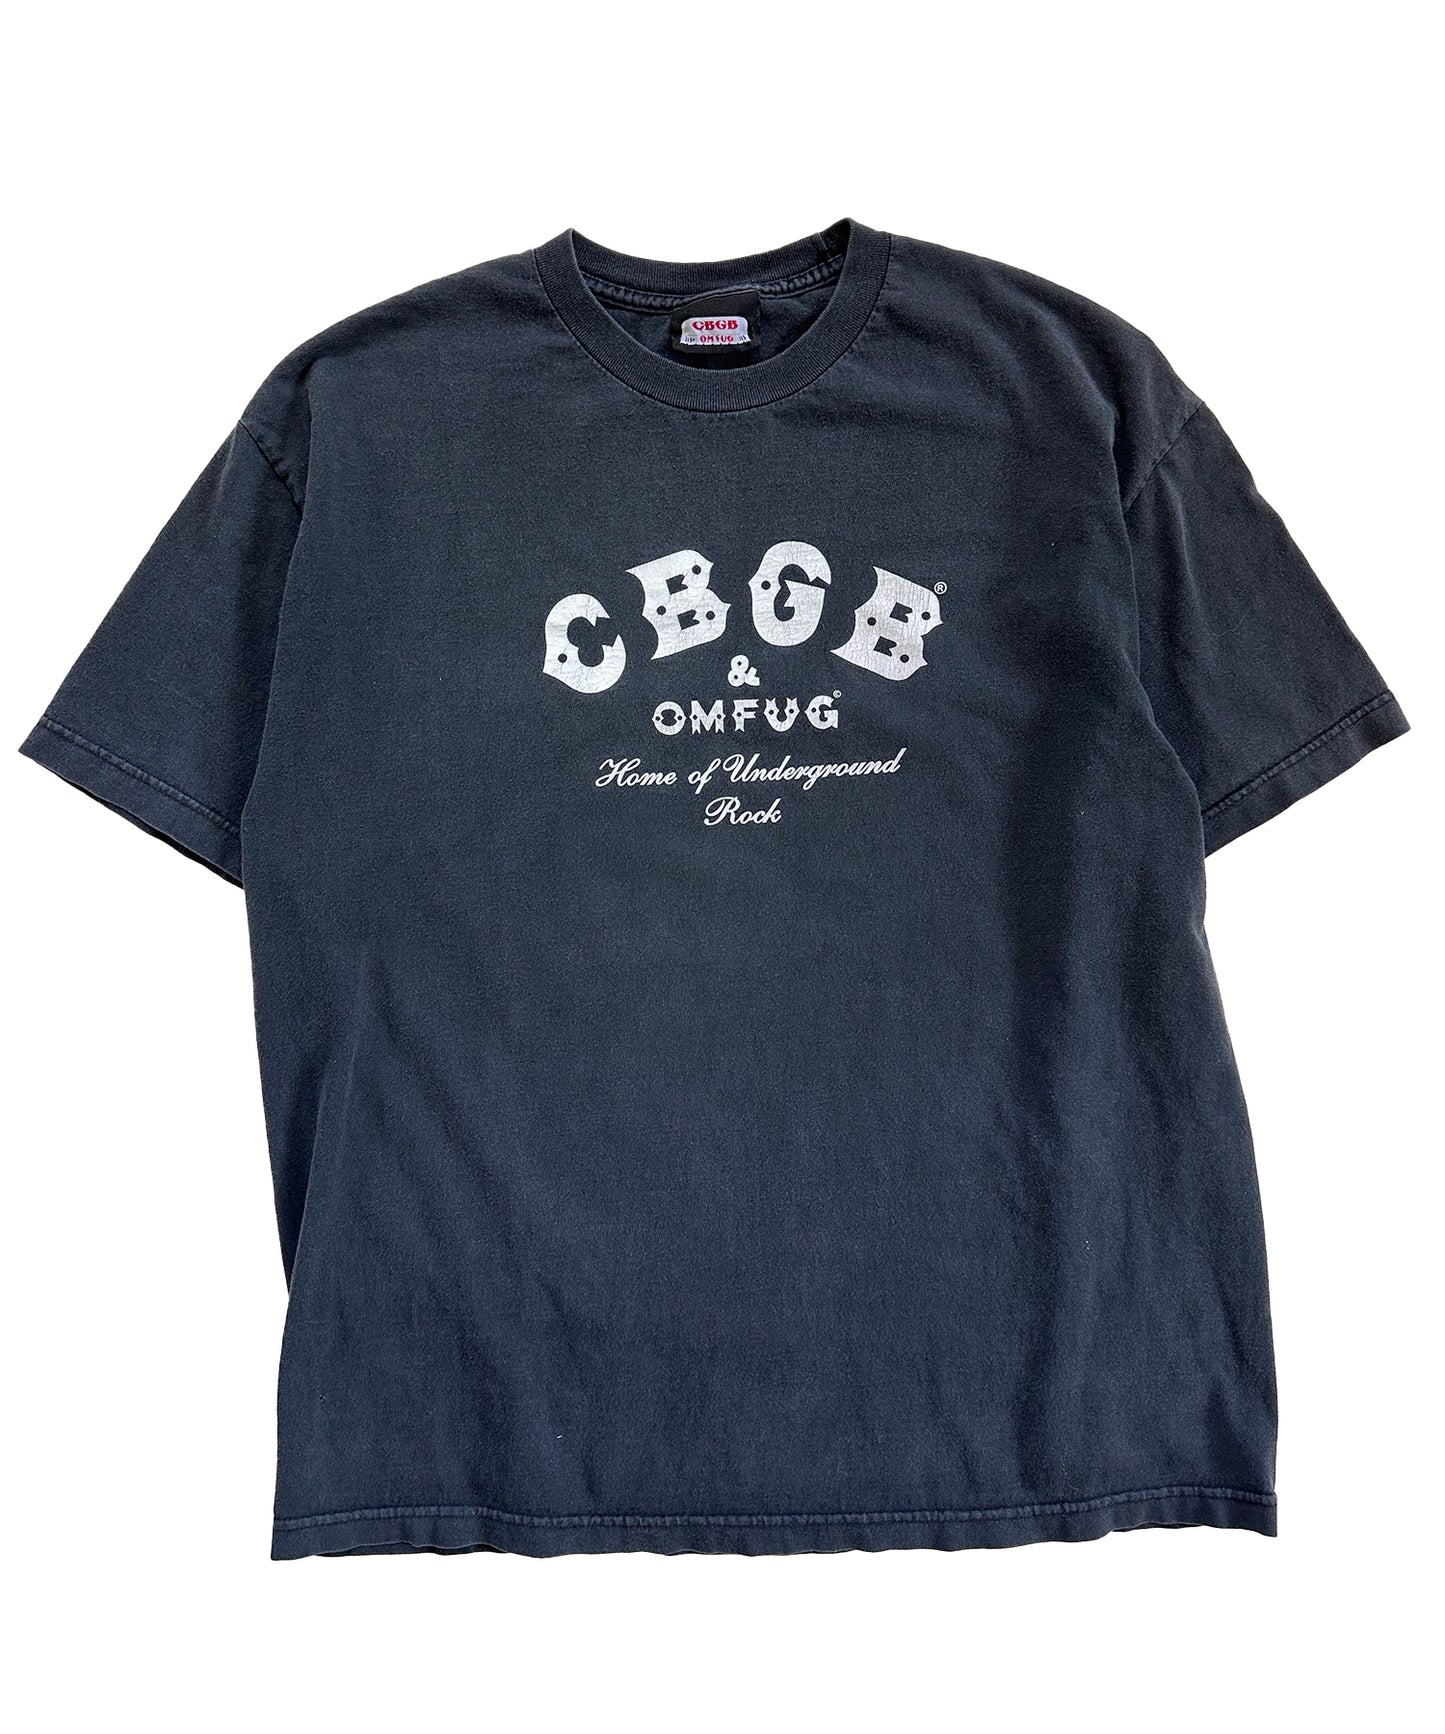 CBGB Tee (XLarge)